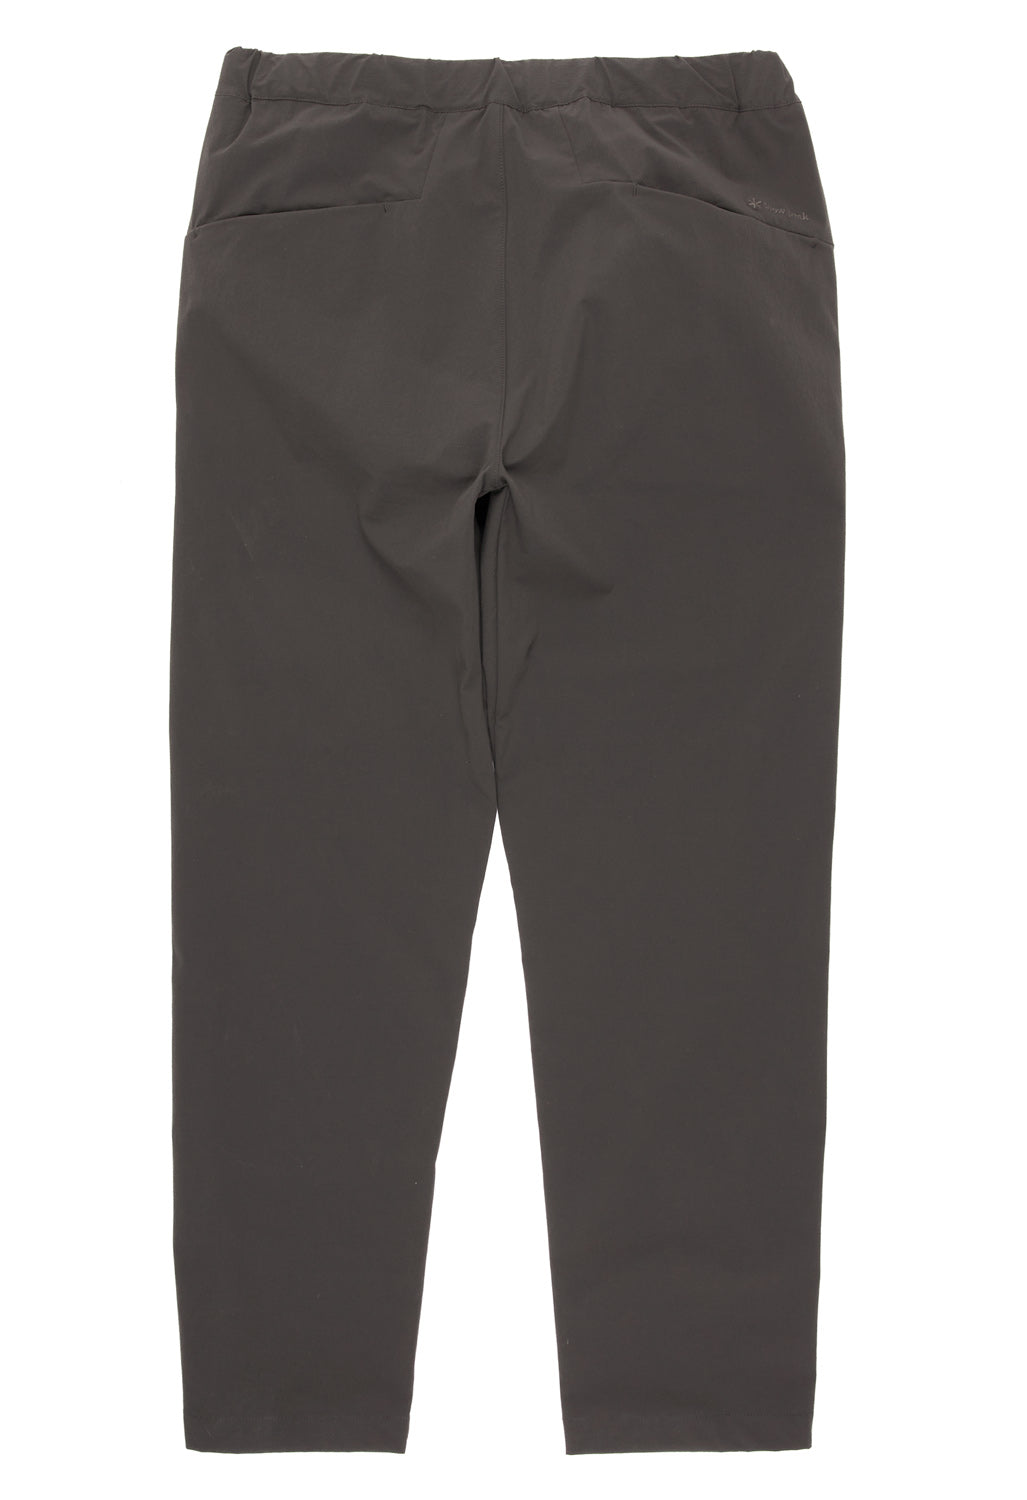 Snow Peak Men's Active Comfort Slim Fit Pants - Dark Olive